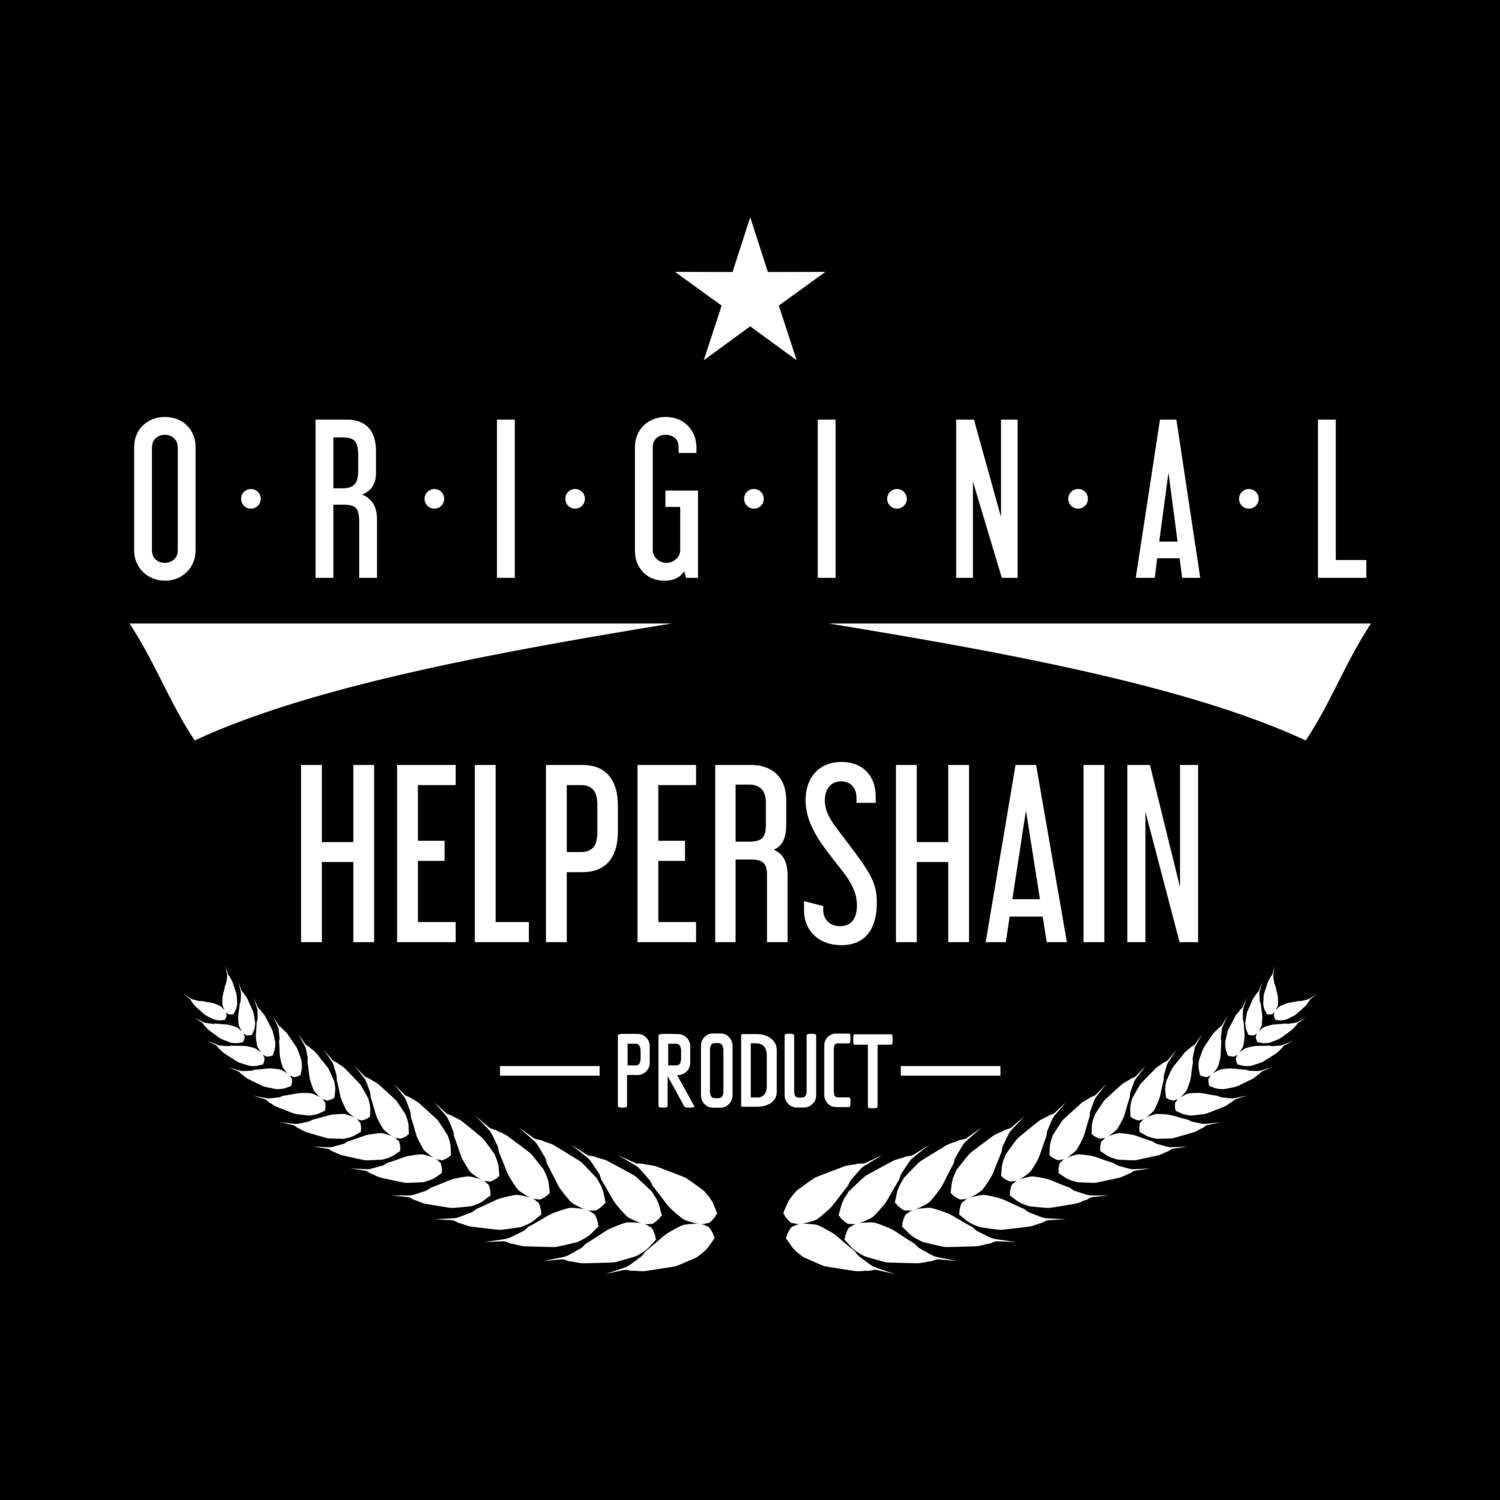 Helpershain T-Shirt »Original Product«